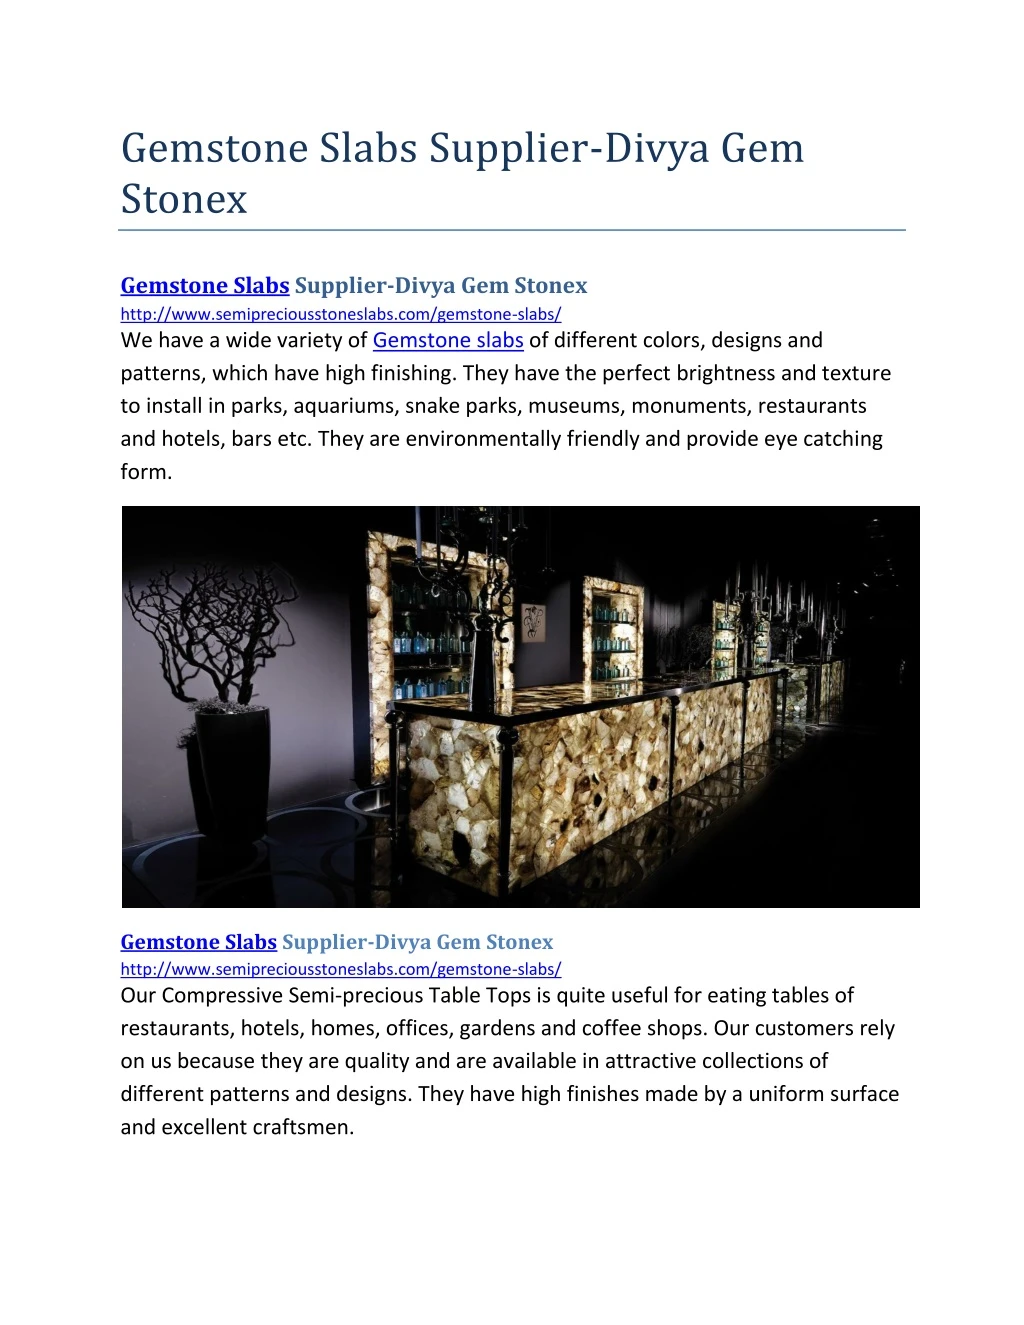 gemstone slabs supplier divya gem stonex